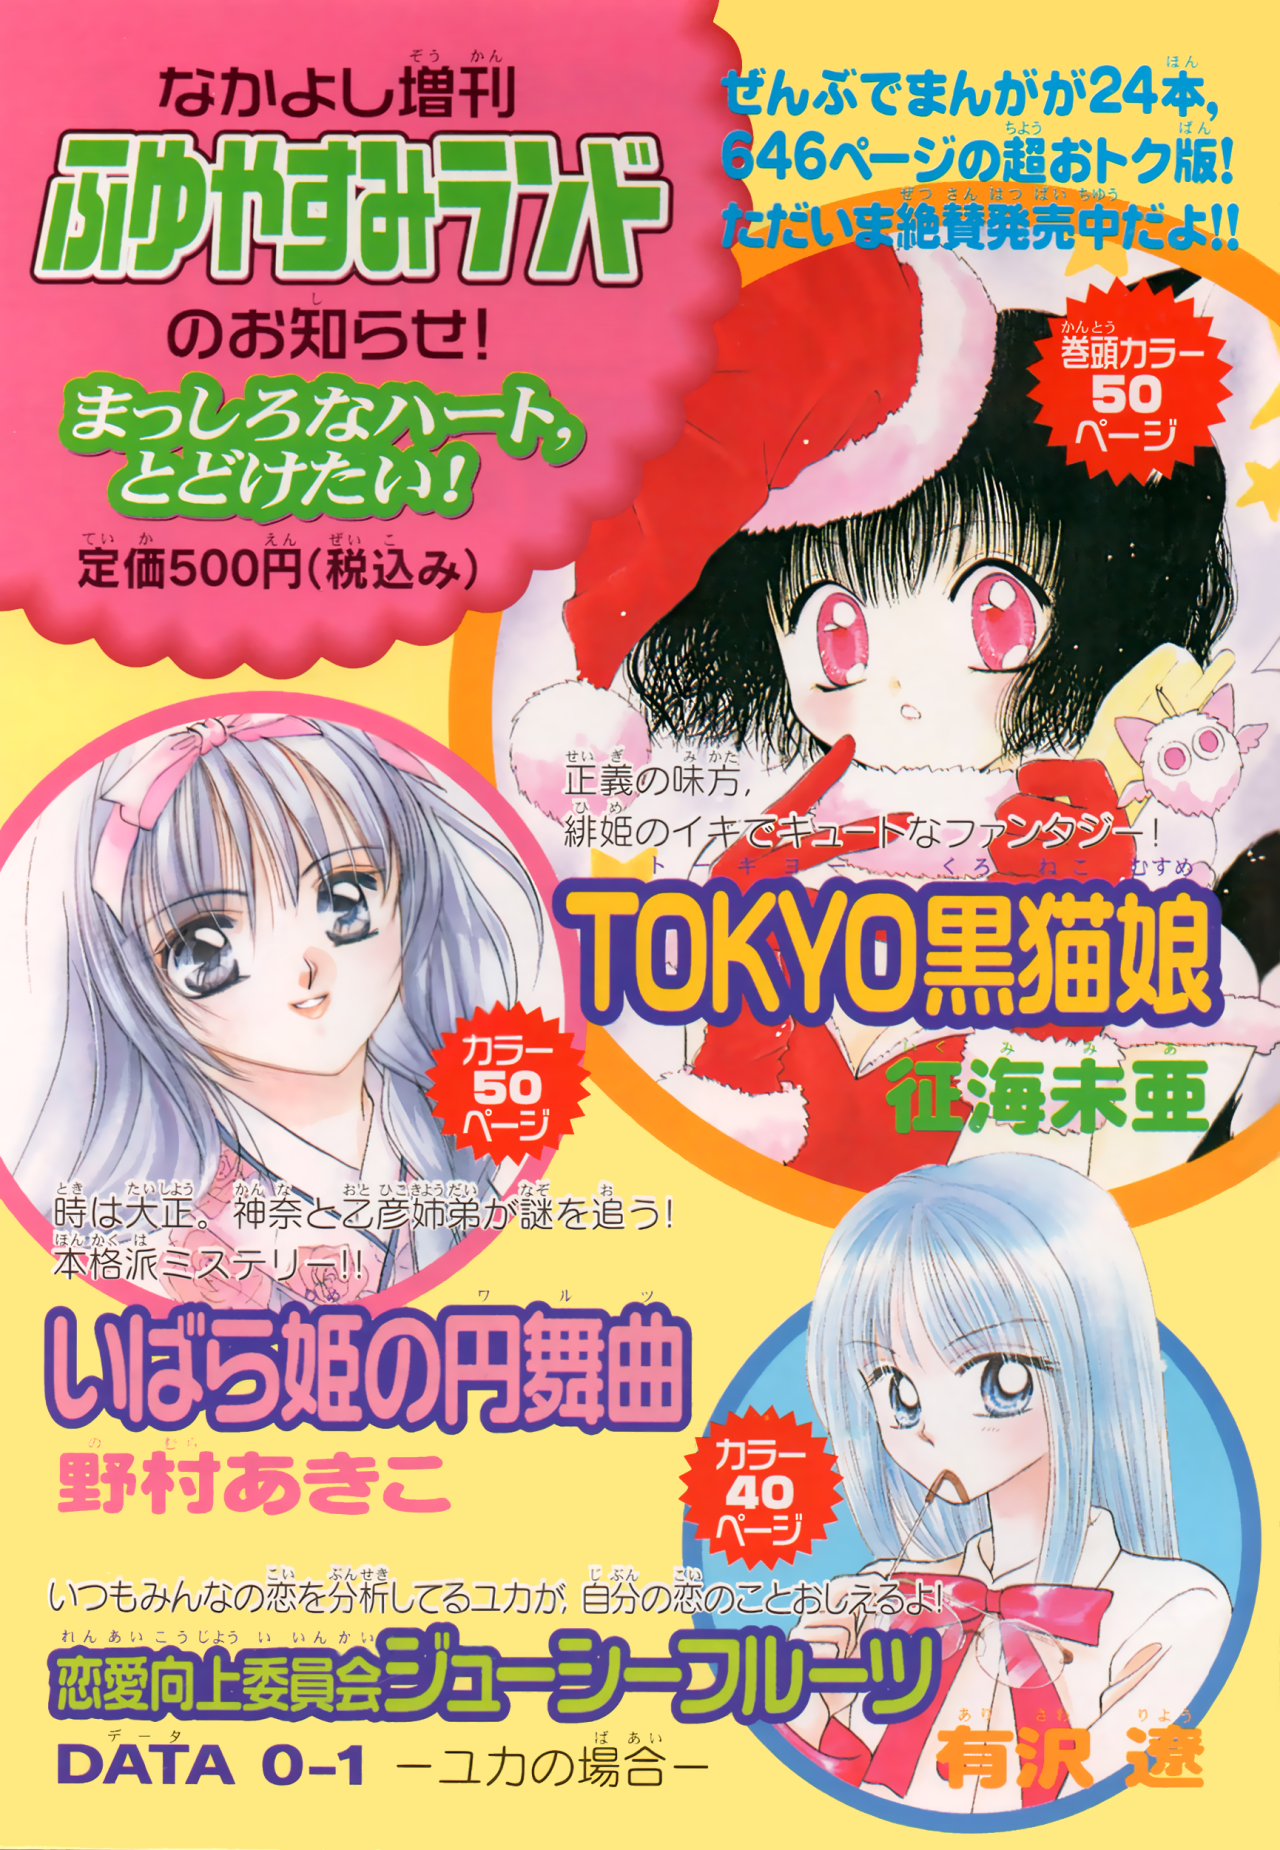 Yagami Central — A mini-series, titled “Petit! Tokyo Mew Mew New”